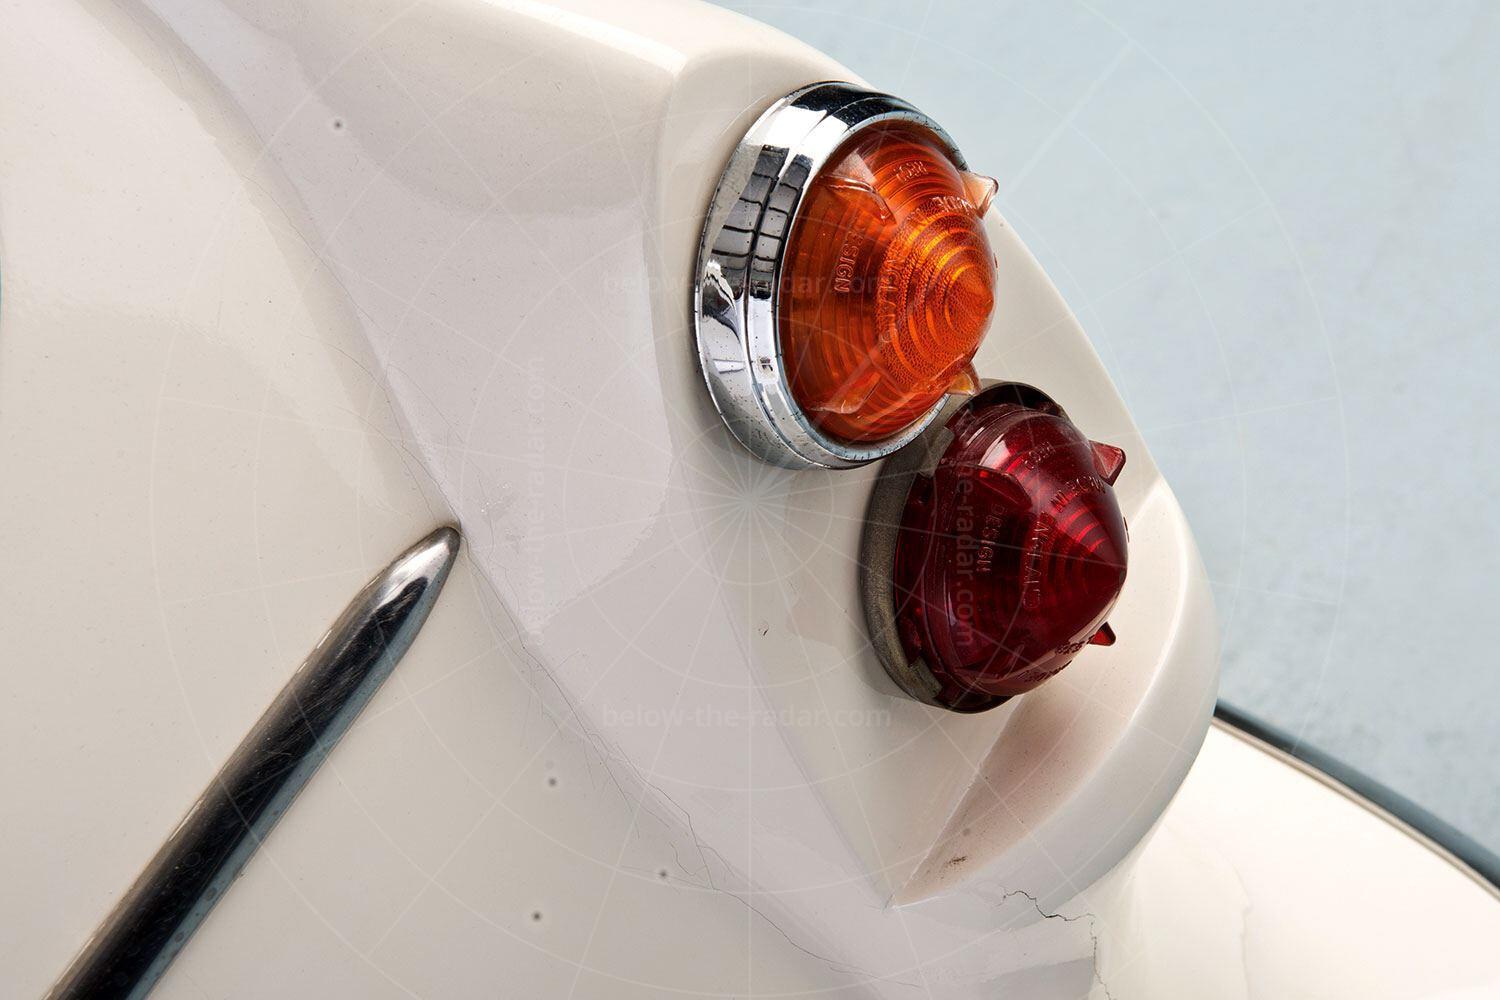 Lightburn Zeta Runabout rear lights Pic: RM Sotheby's | Lightburn Zeta Runabout rear lights